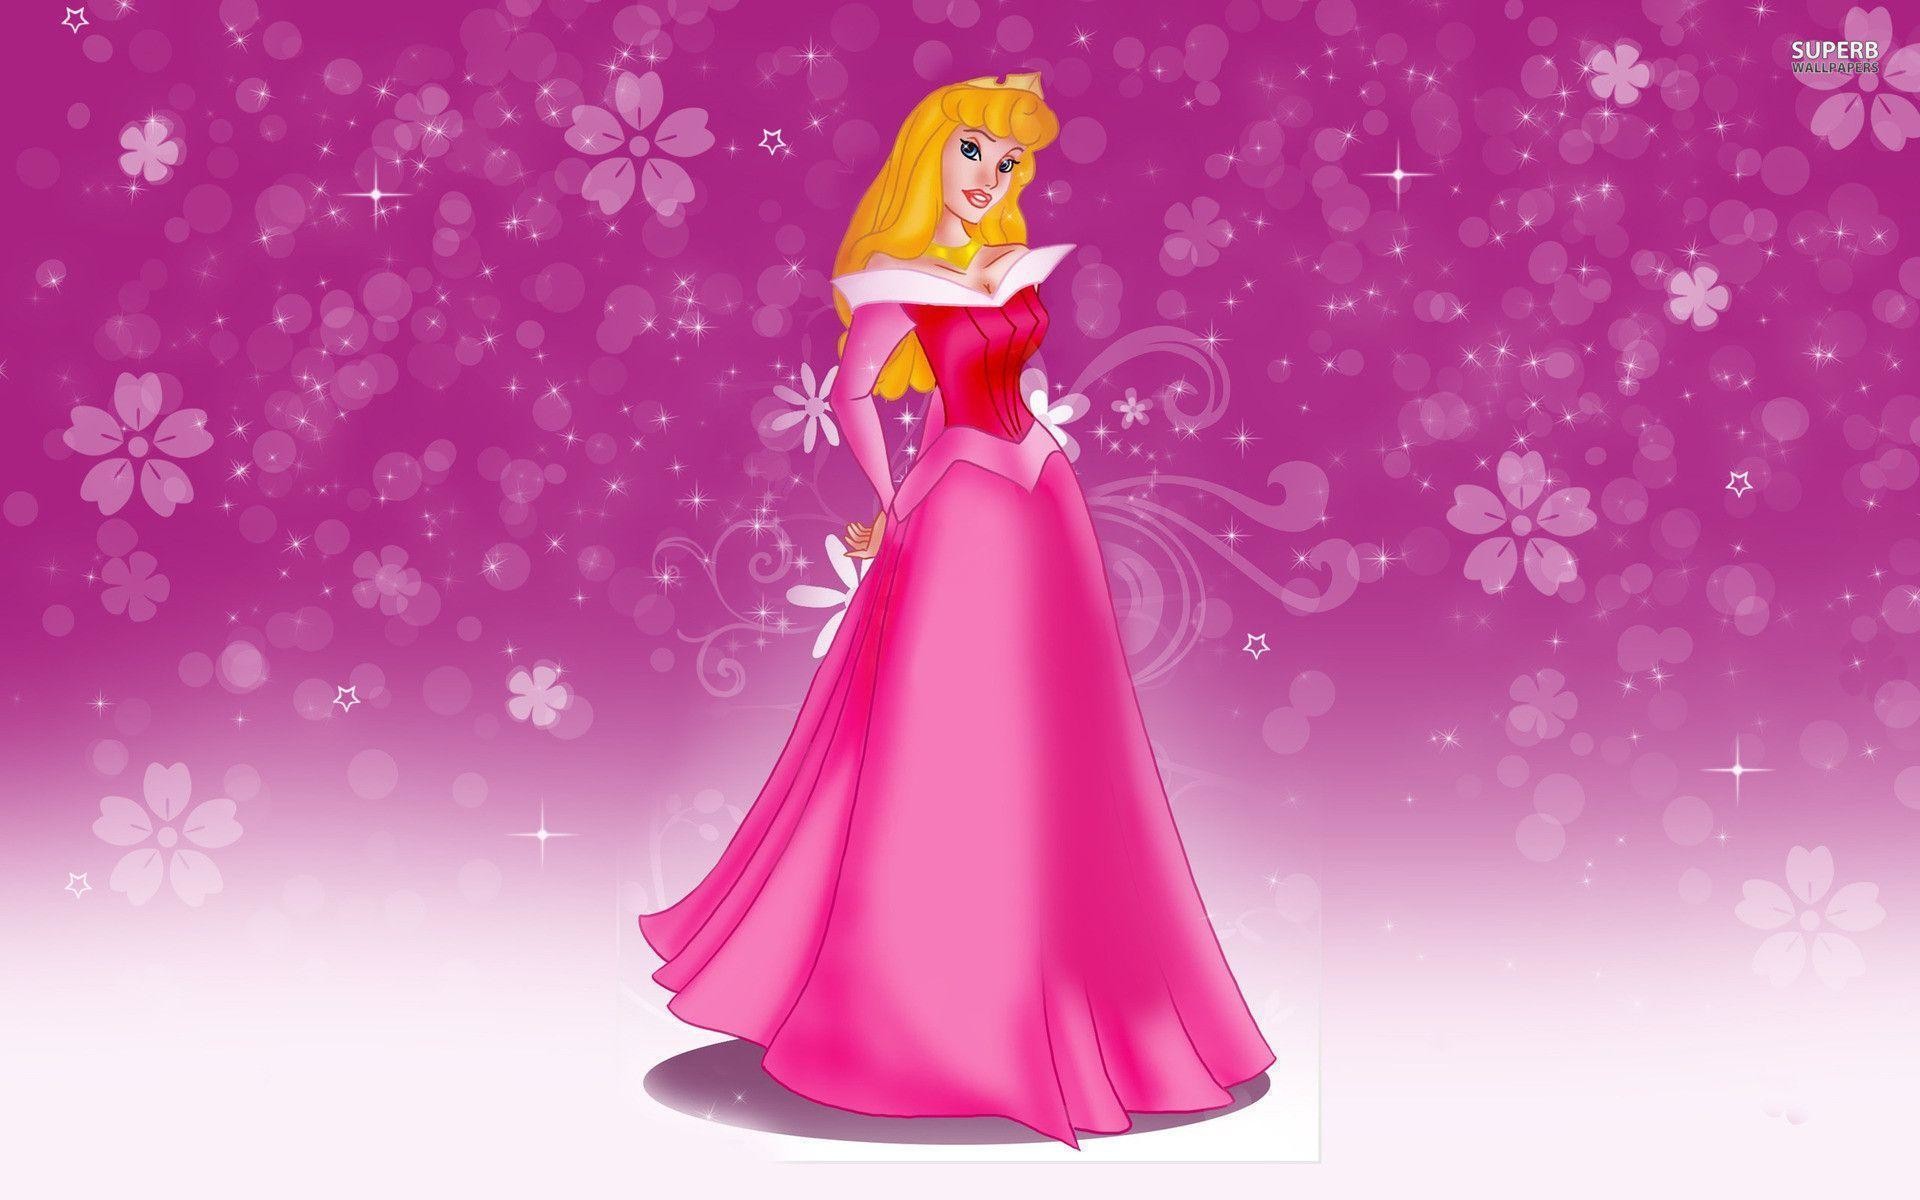 Sleeping Beauty Wallpaper Disney Princess (62+ pictures)